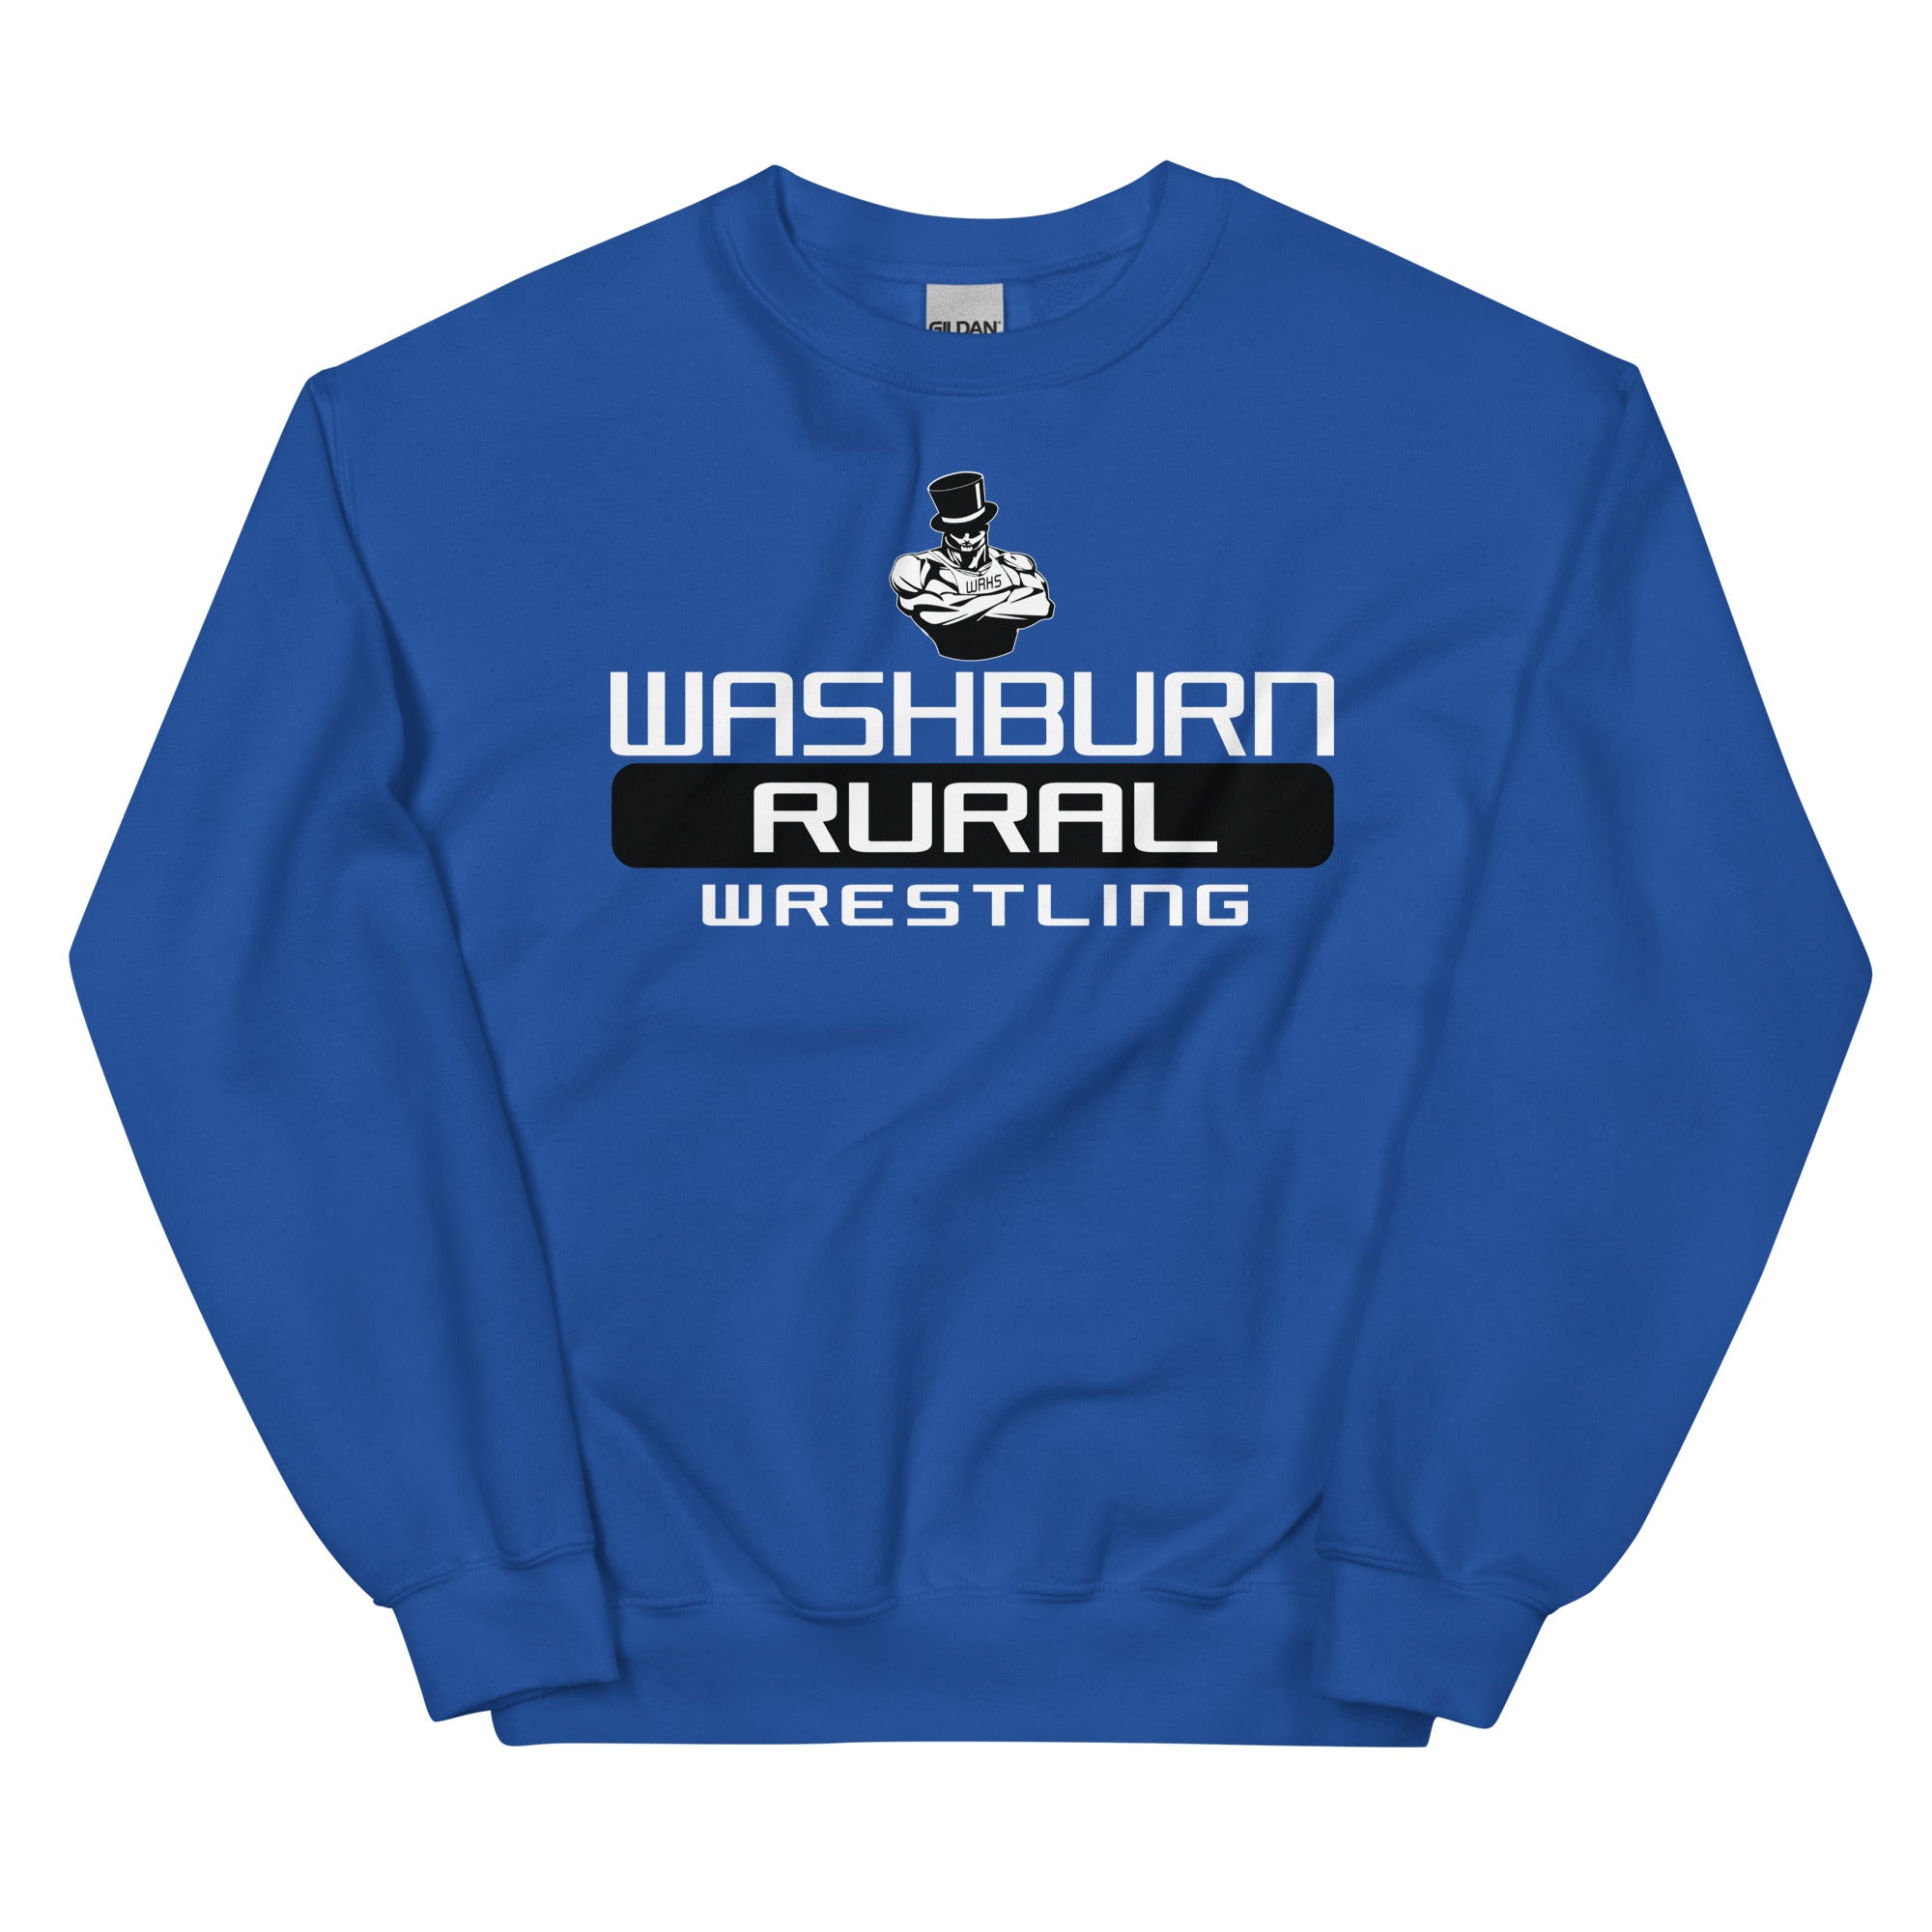 Washburn Rural Wrestling Unisex Sweatshirt